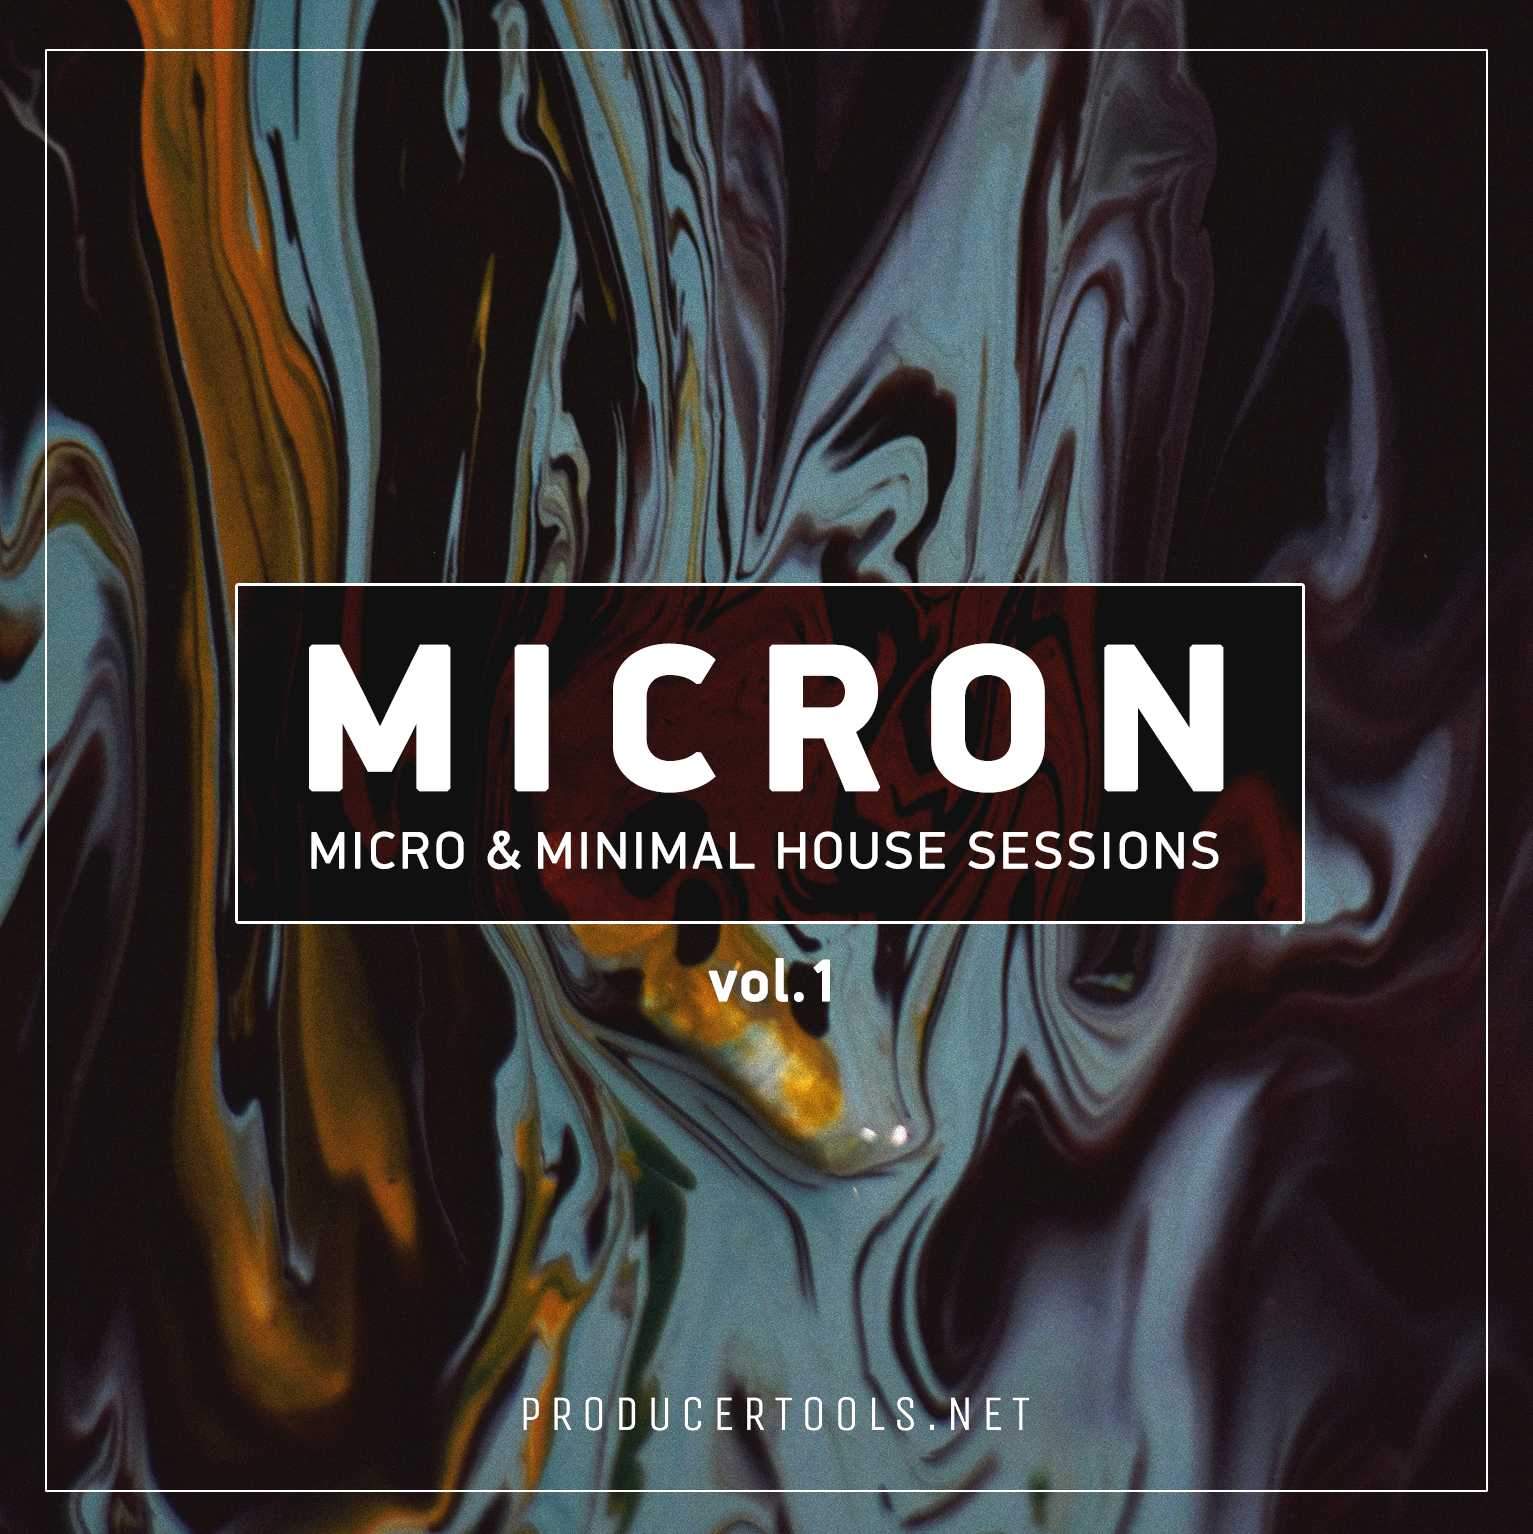 MICRON - micro & minimal house sessions - producertools.net